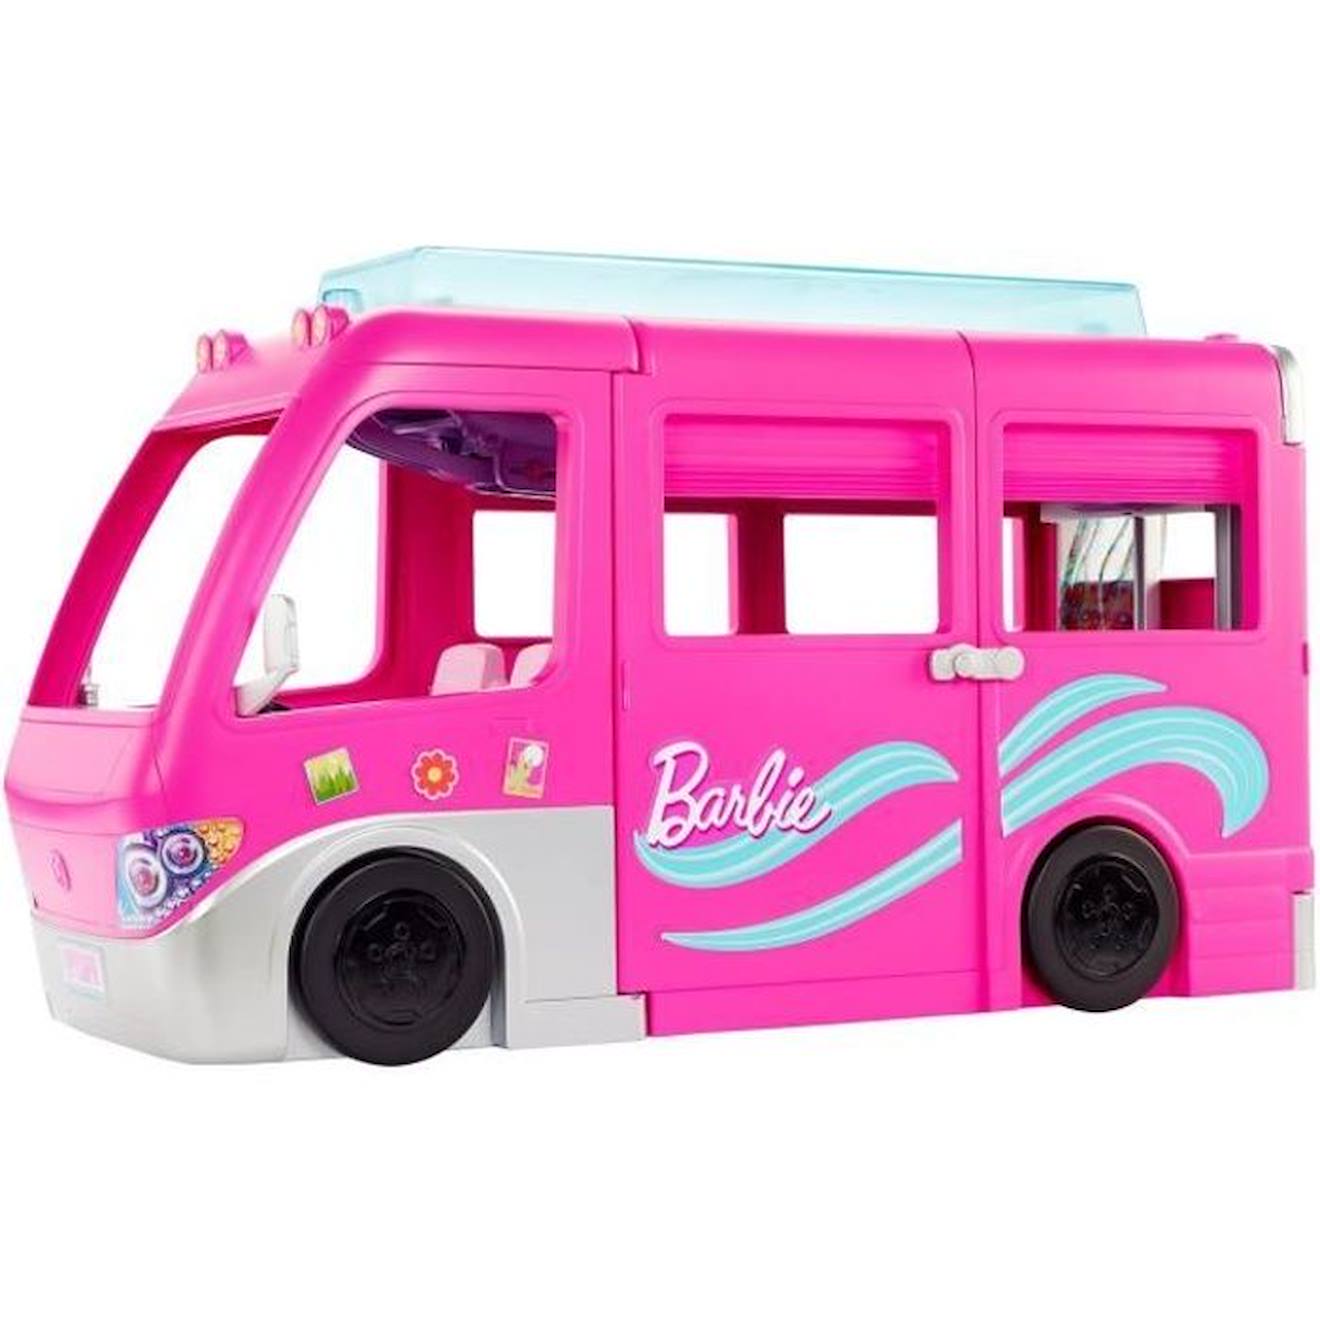 Barbie - Méga Camping-car De Barbie - Accessoire Poupée Hcd46 Rose